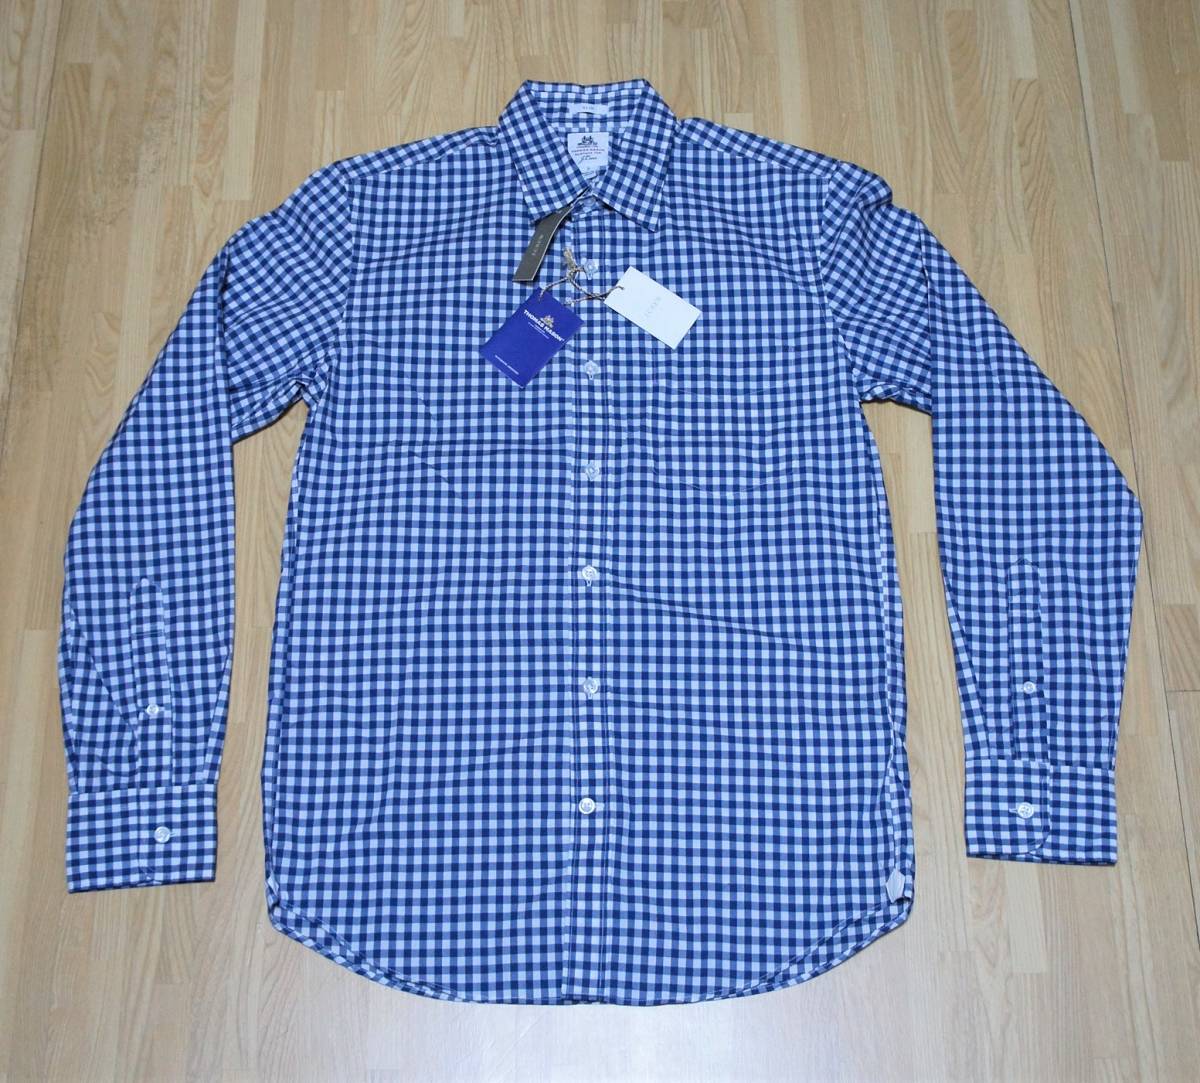 SALE！送料無料！【新品】サイズ:S SLIM FIT ジェイクルー Thomas Mason for J.Crew Ludlow shirt in blue gingham 3_画像4